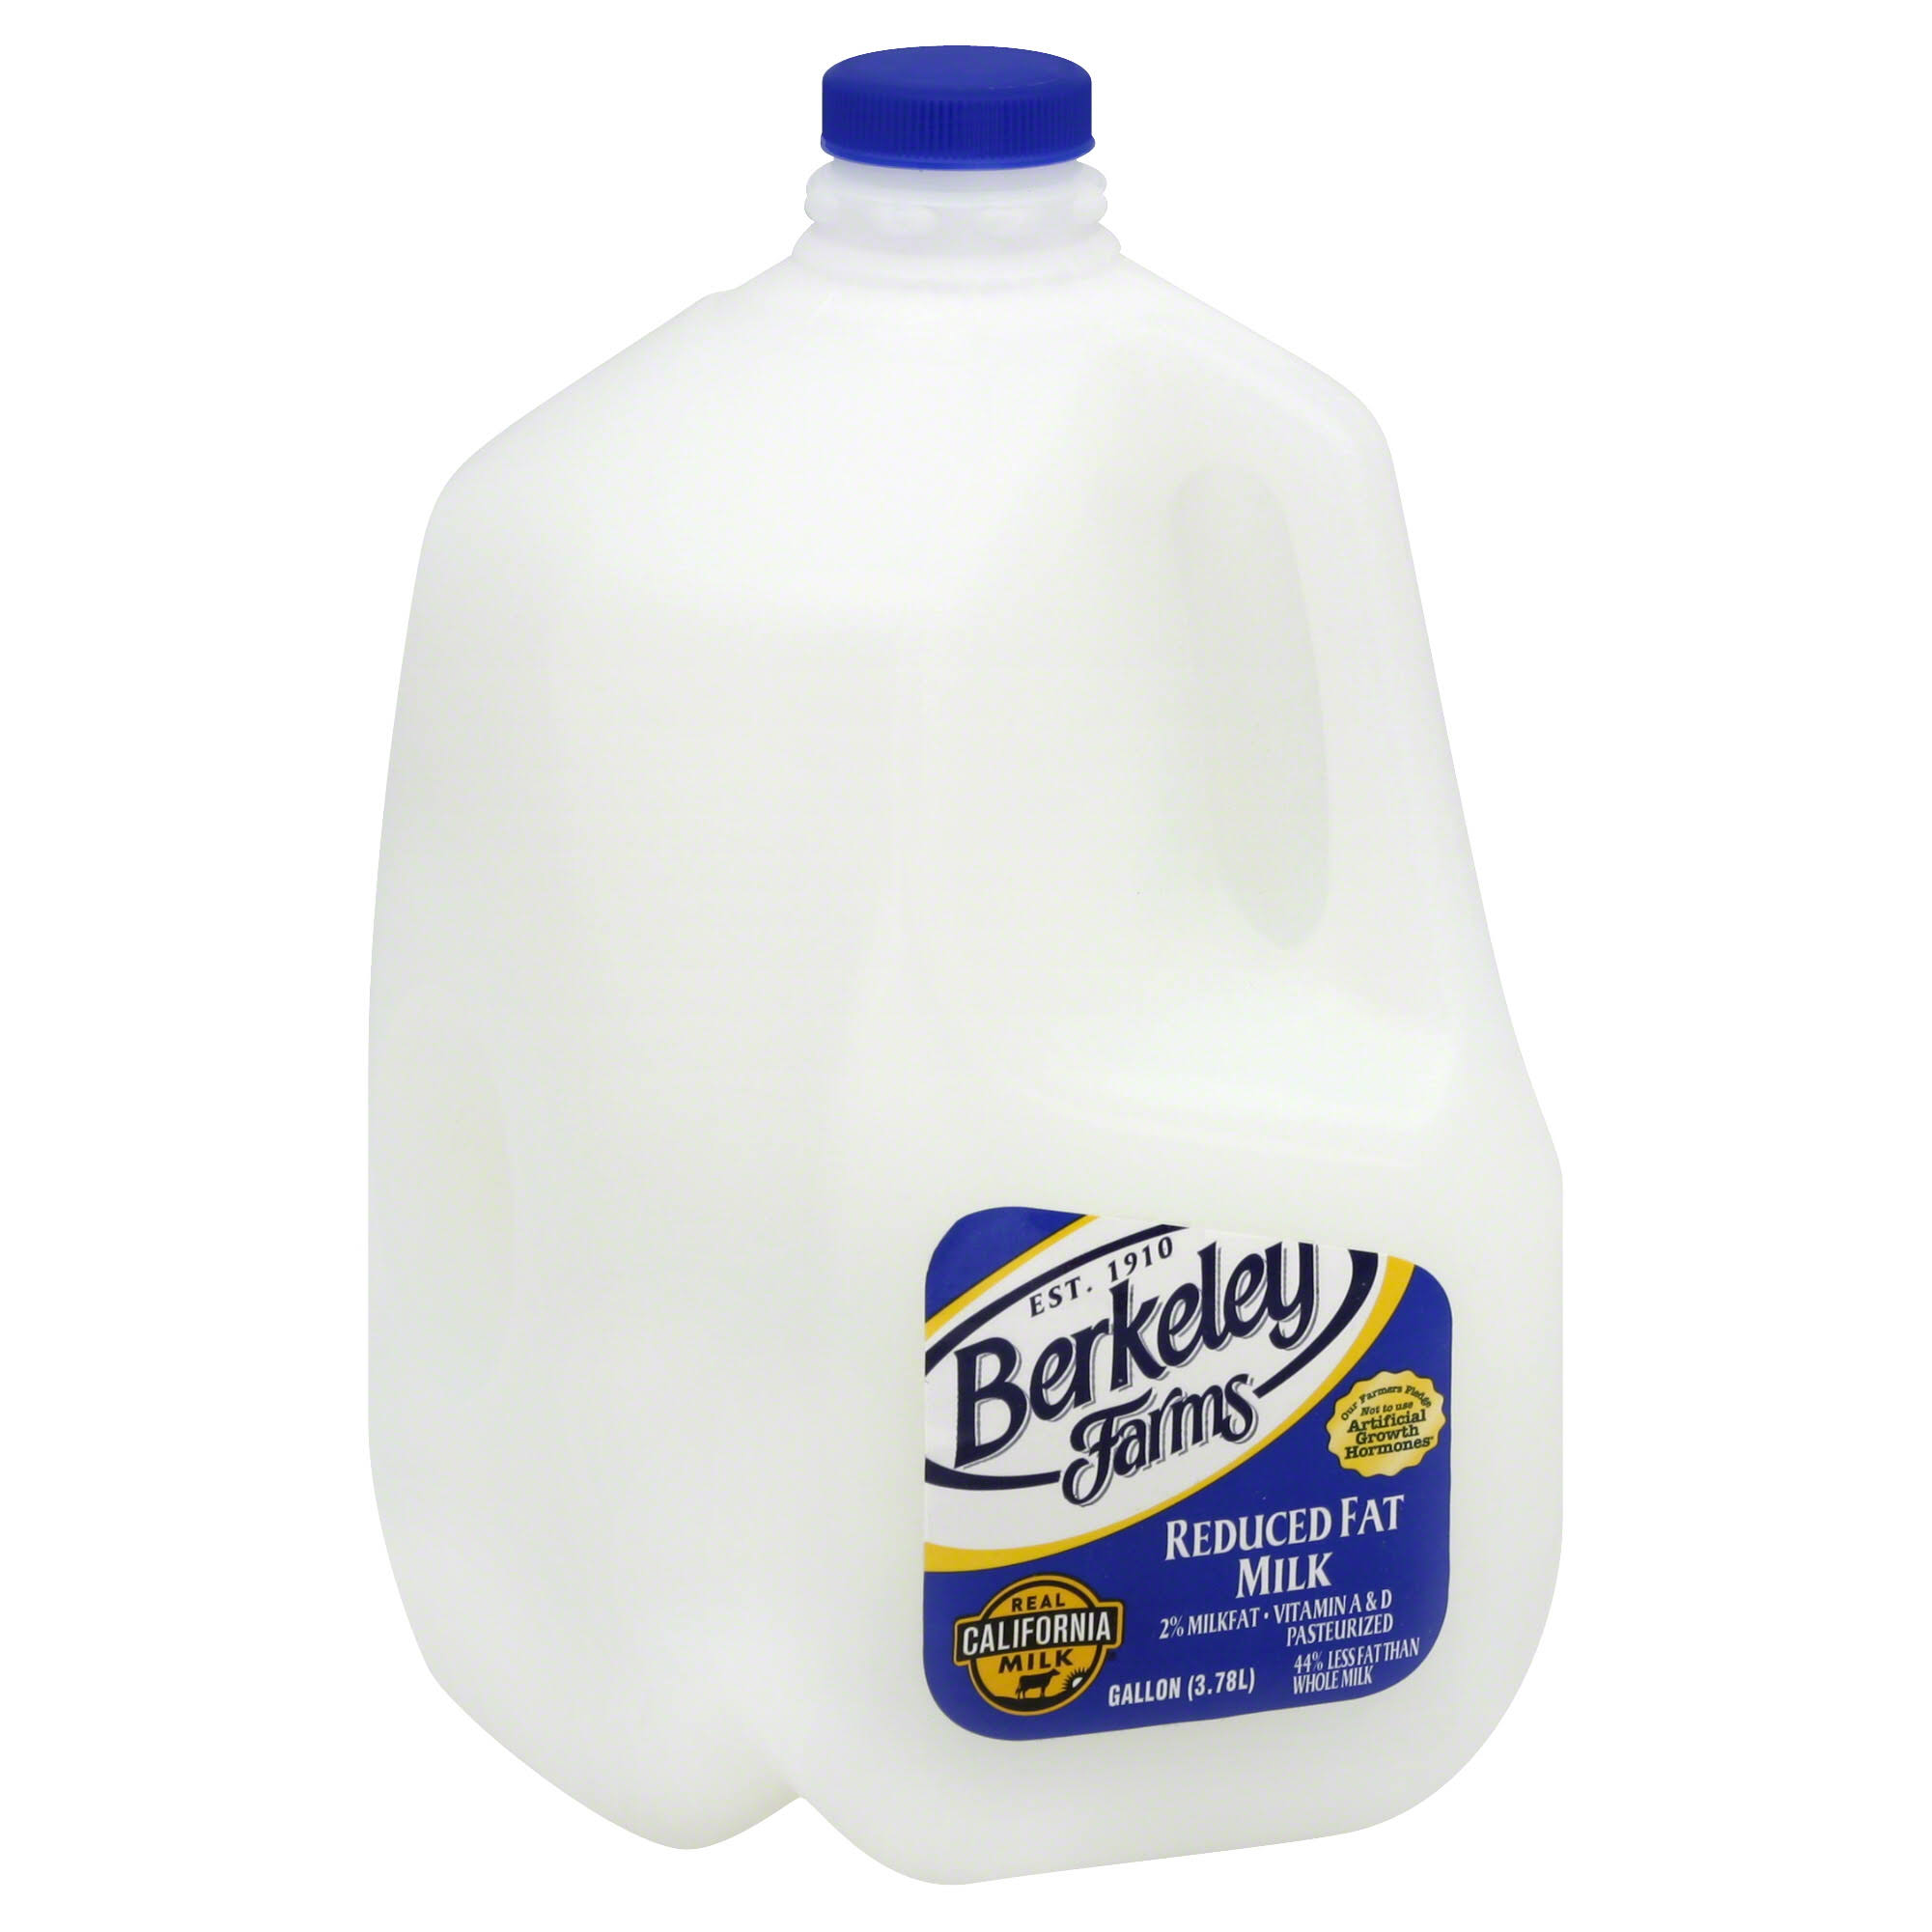 Berkeley Farms Milk, Reduced Fat, 2% Milkfat - 1 gl (3.78 lt)